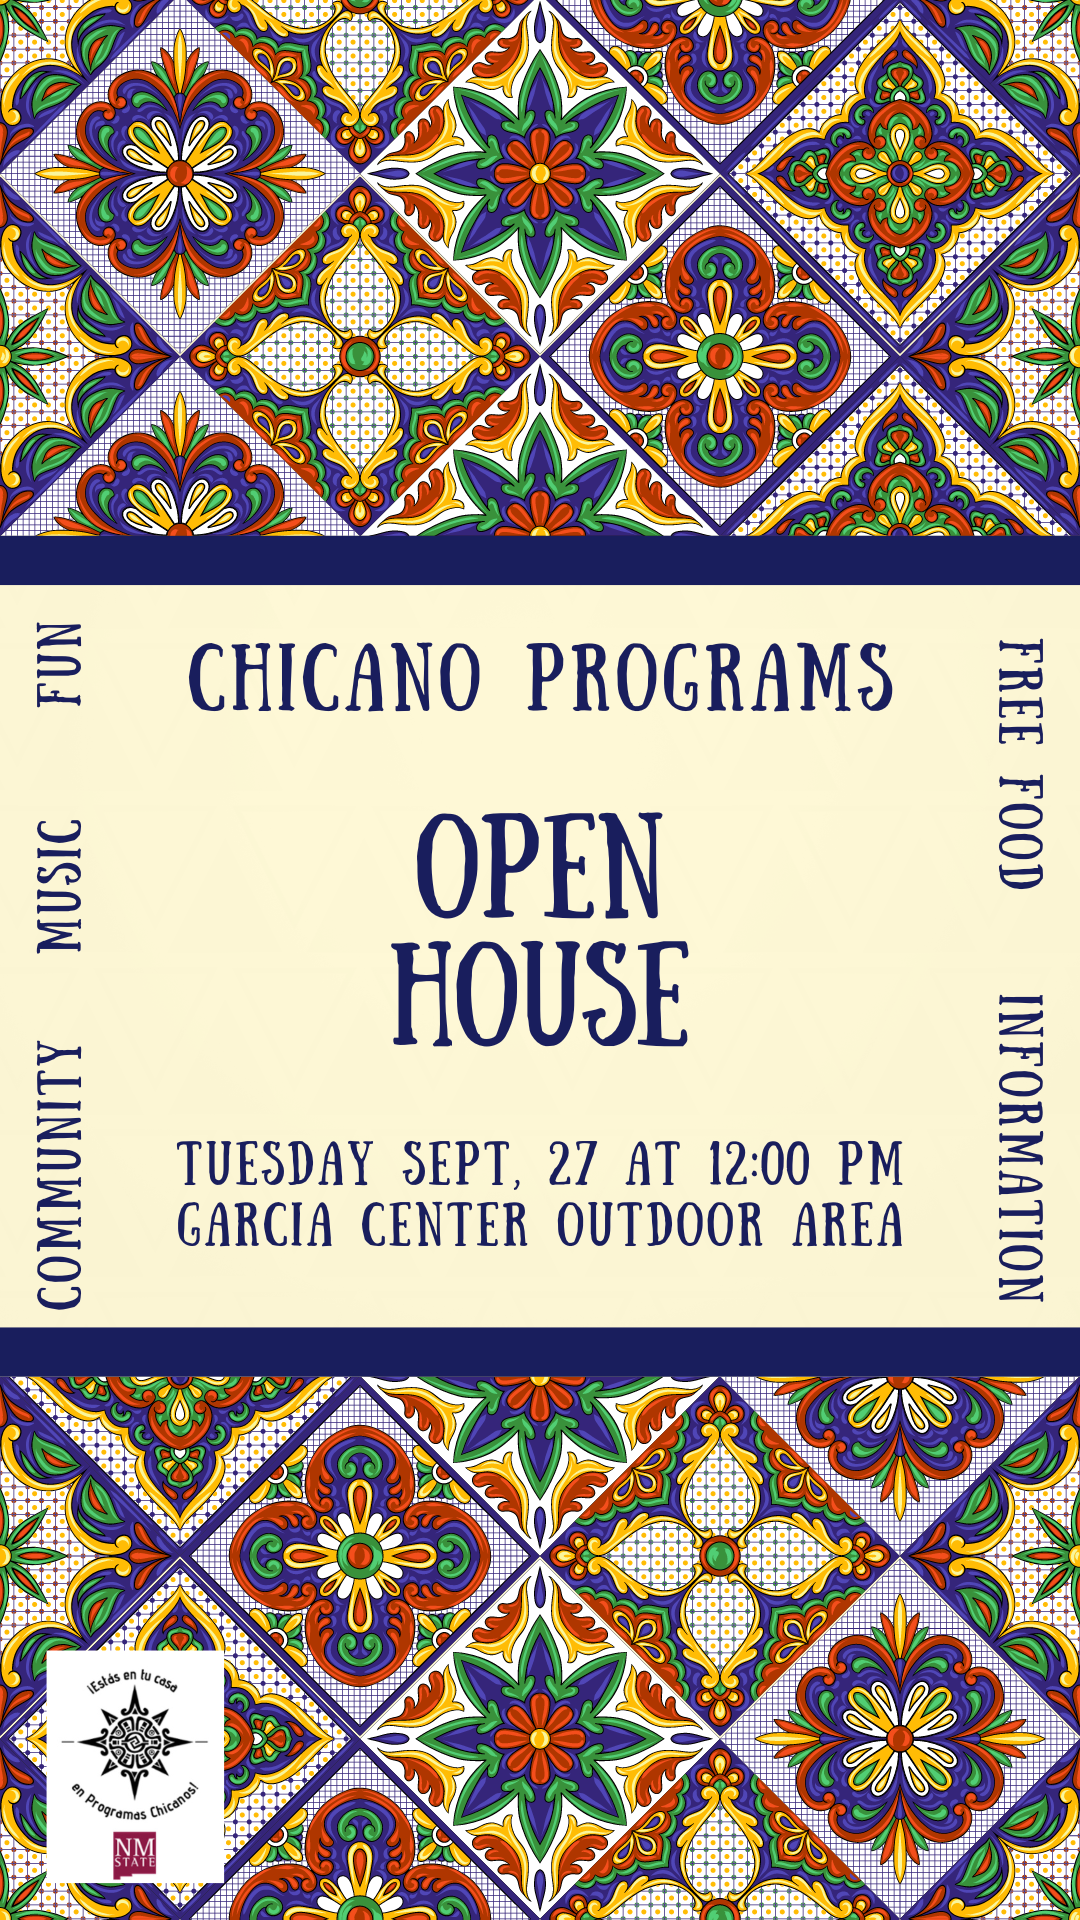 Chicano Programs Open House Flyer.